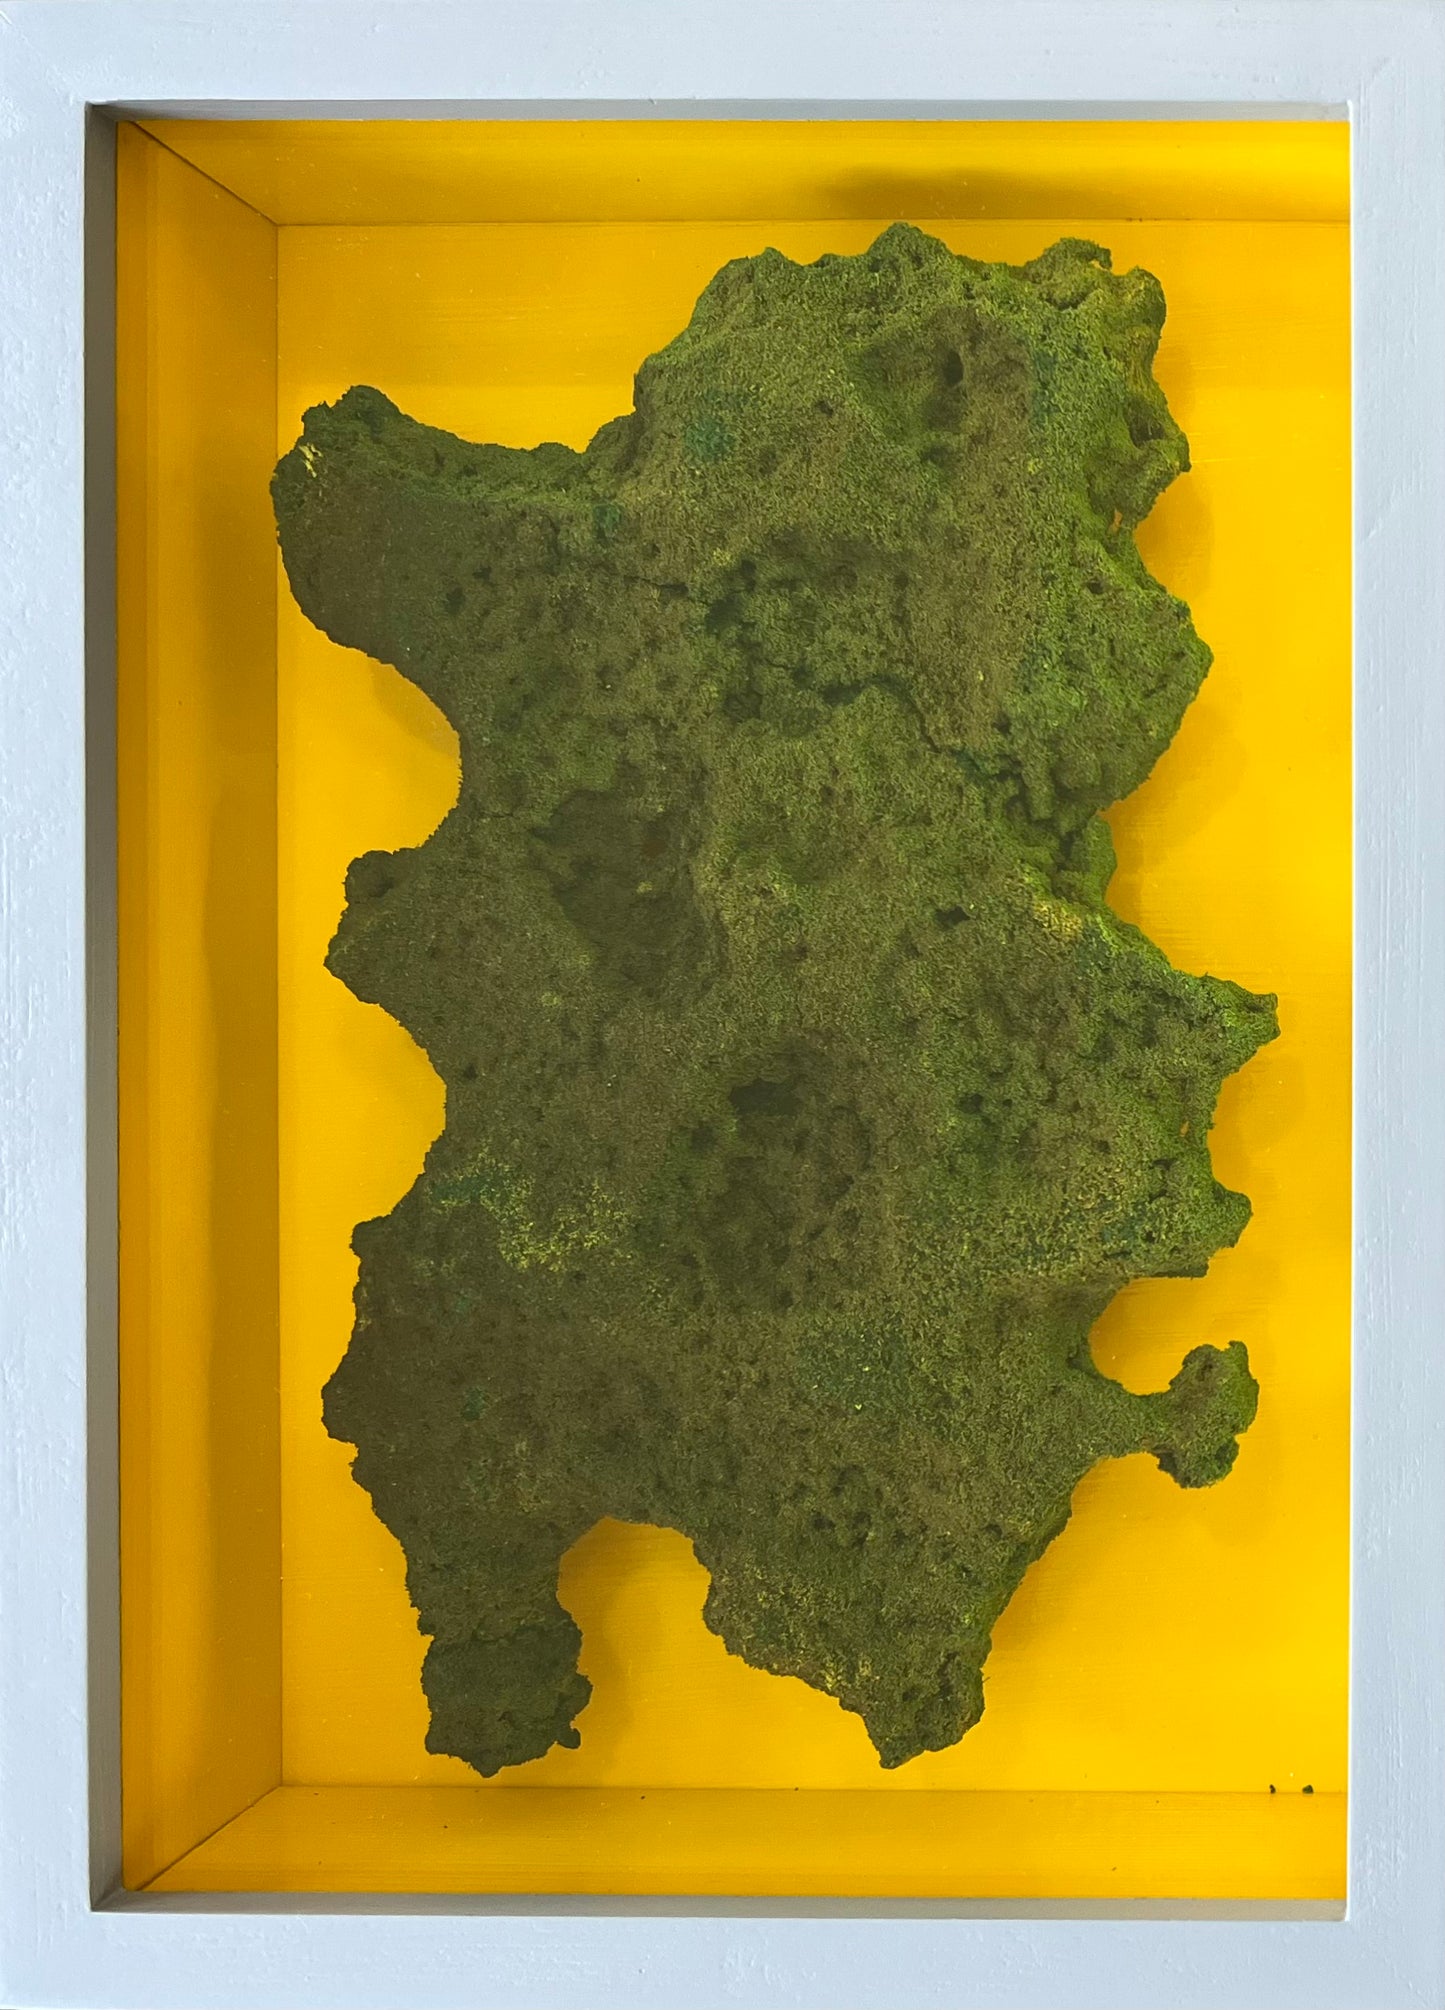 Thomas Lunden. “Fried landscape”, 2014